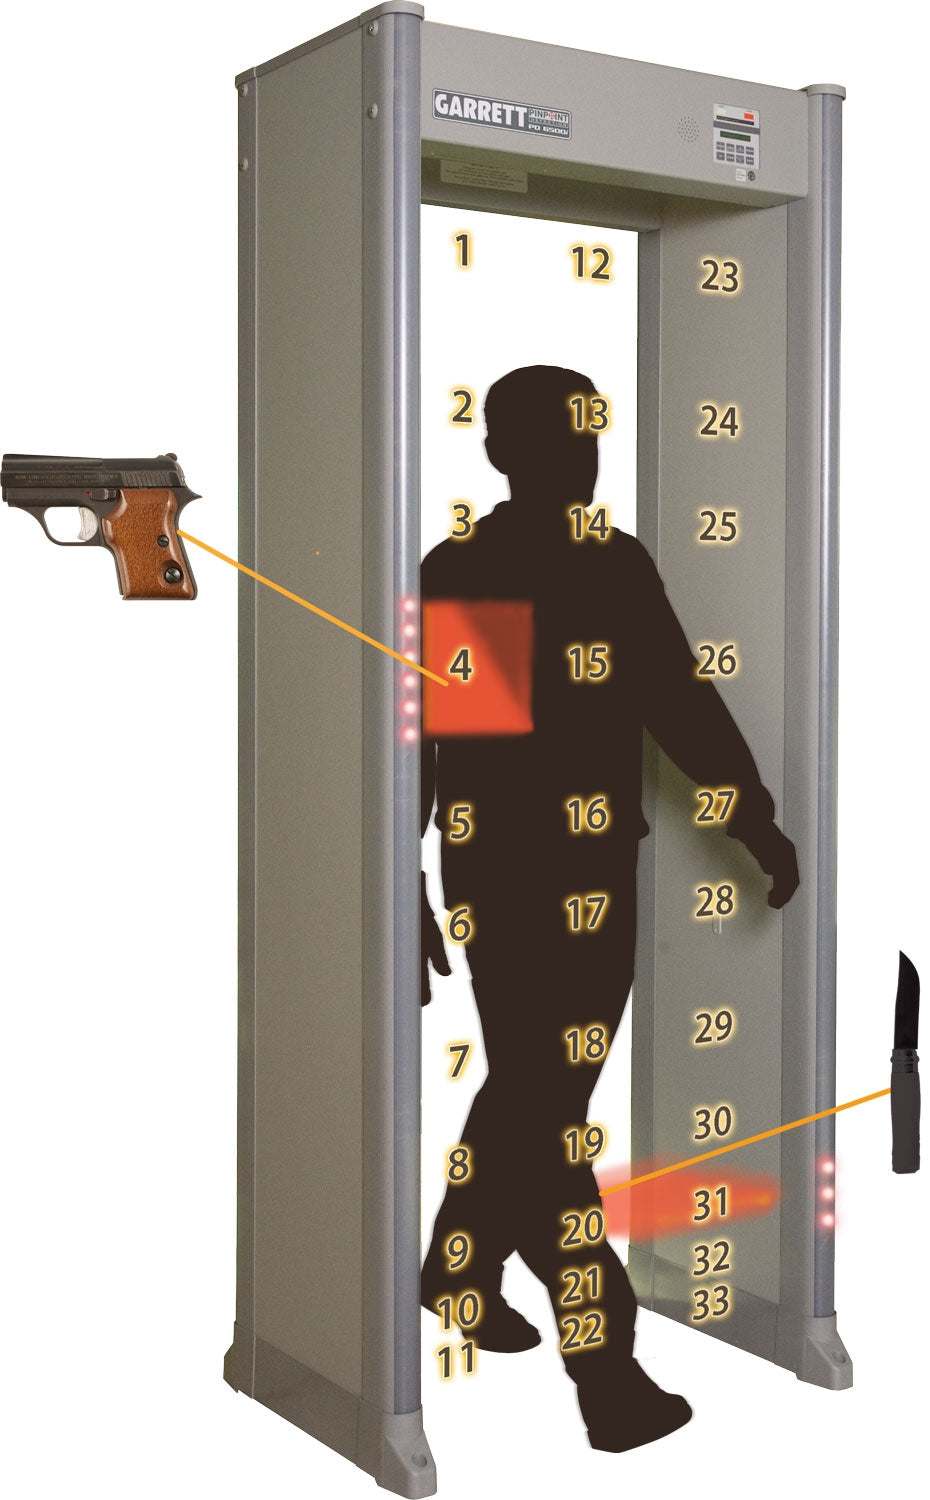 Garrett PD6500i Security Metal Detector zones with Weapons